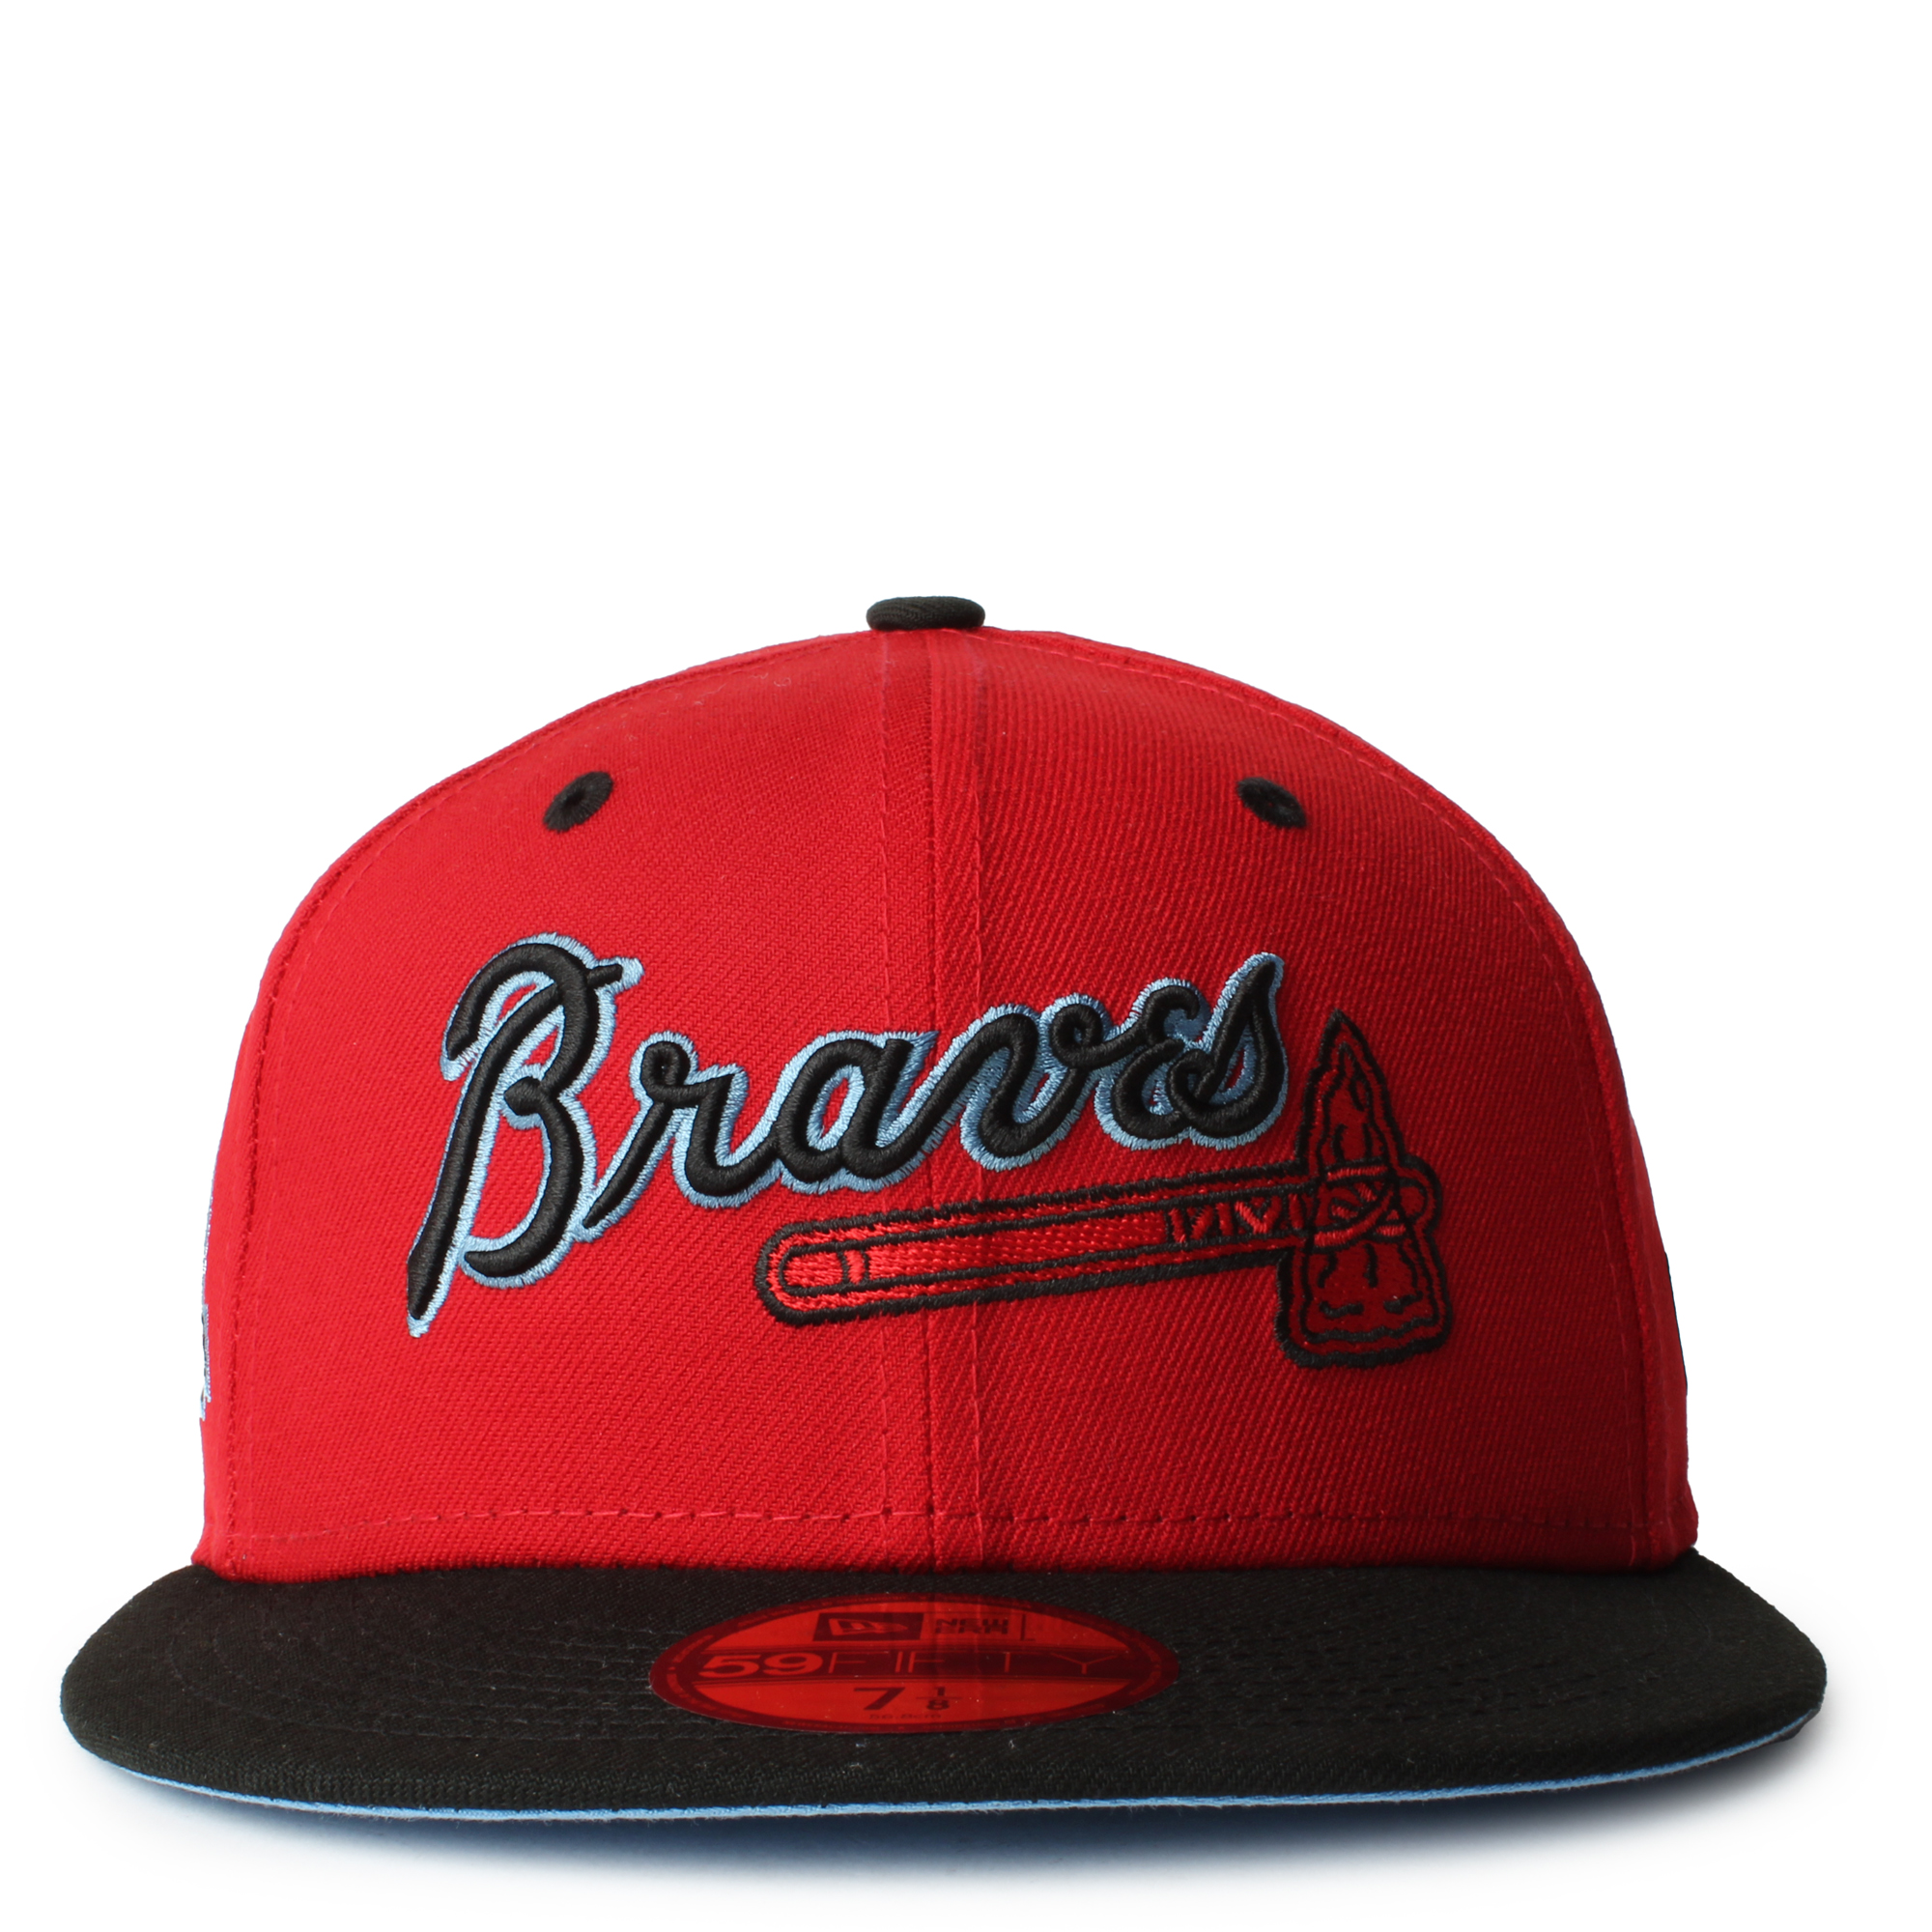 Atlanta Braves Flat Bill Hat Size 7.5 -  Singapore